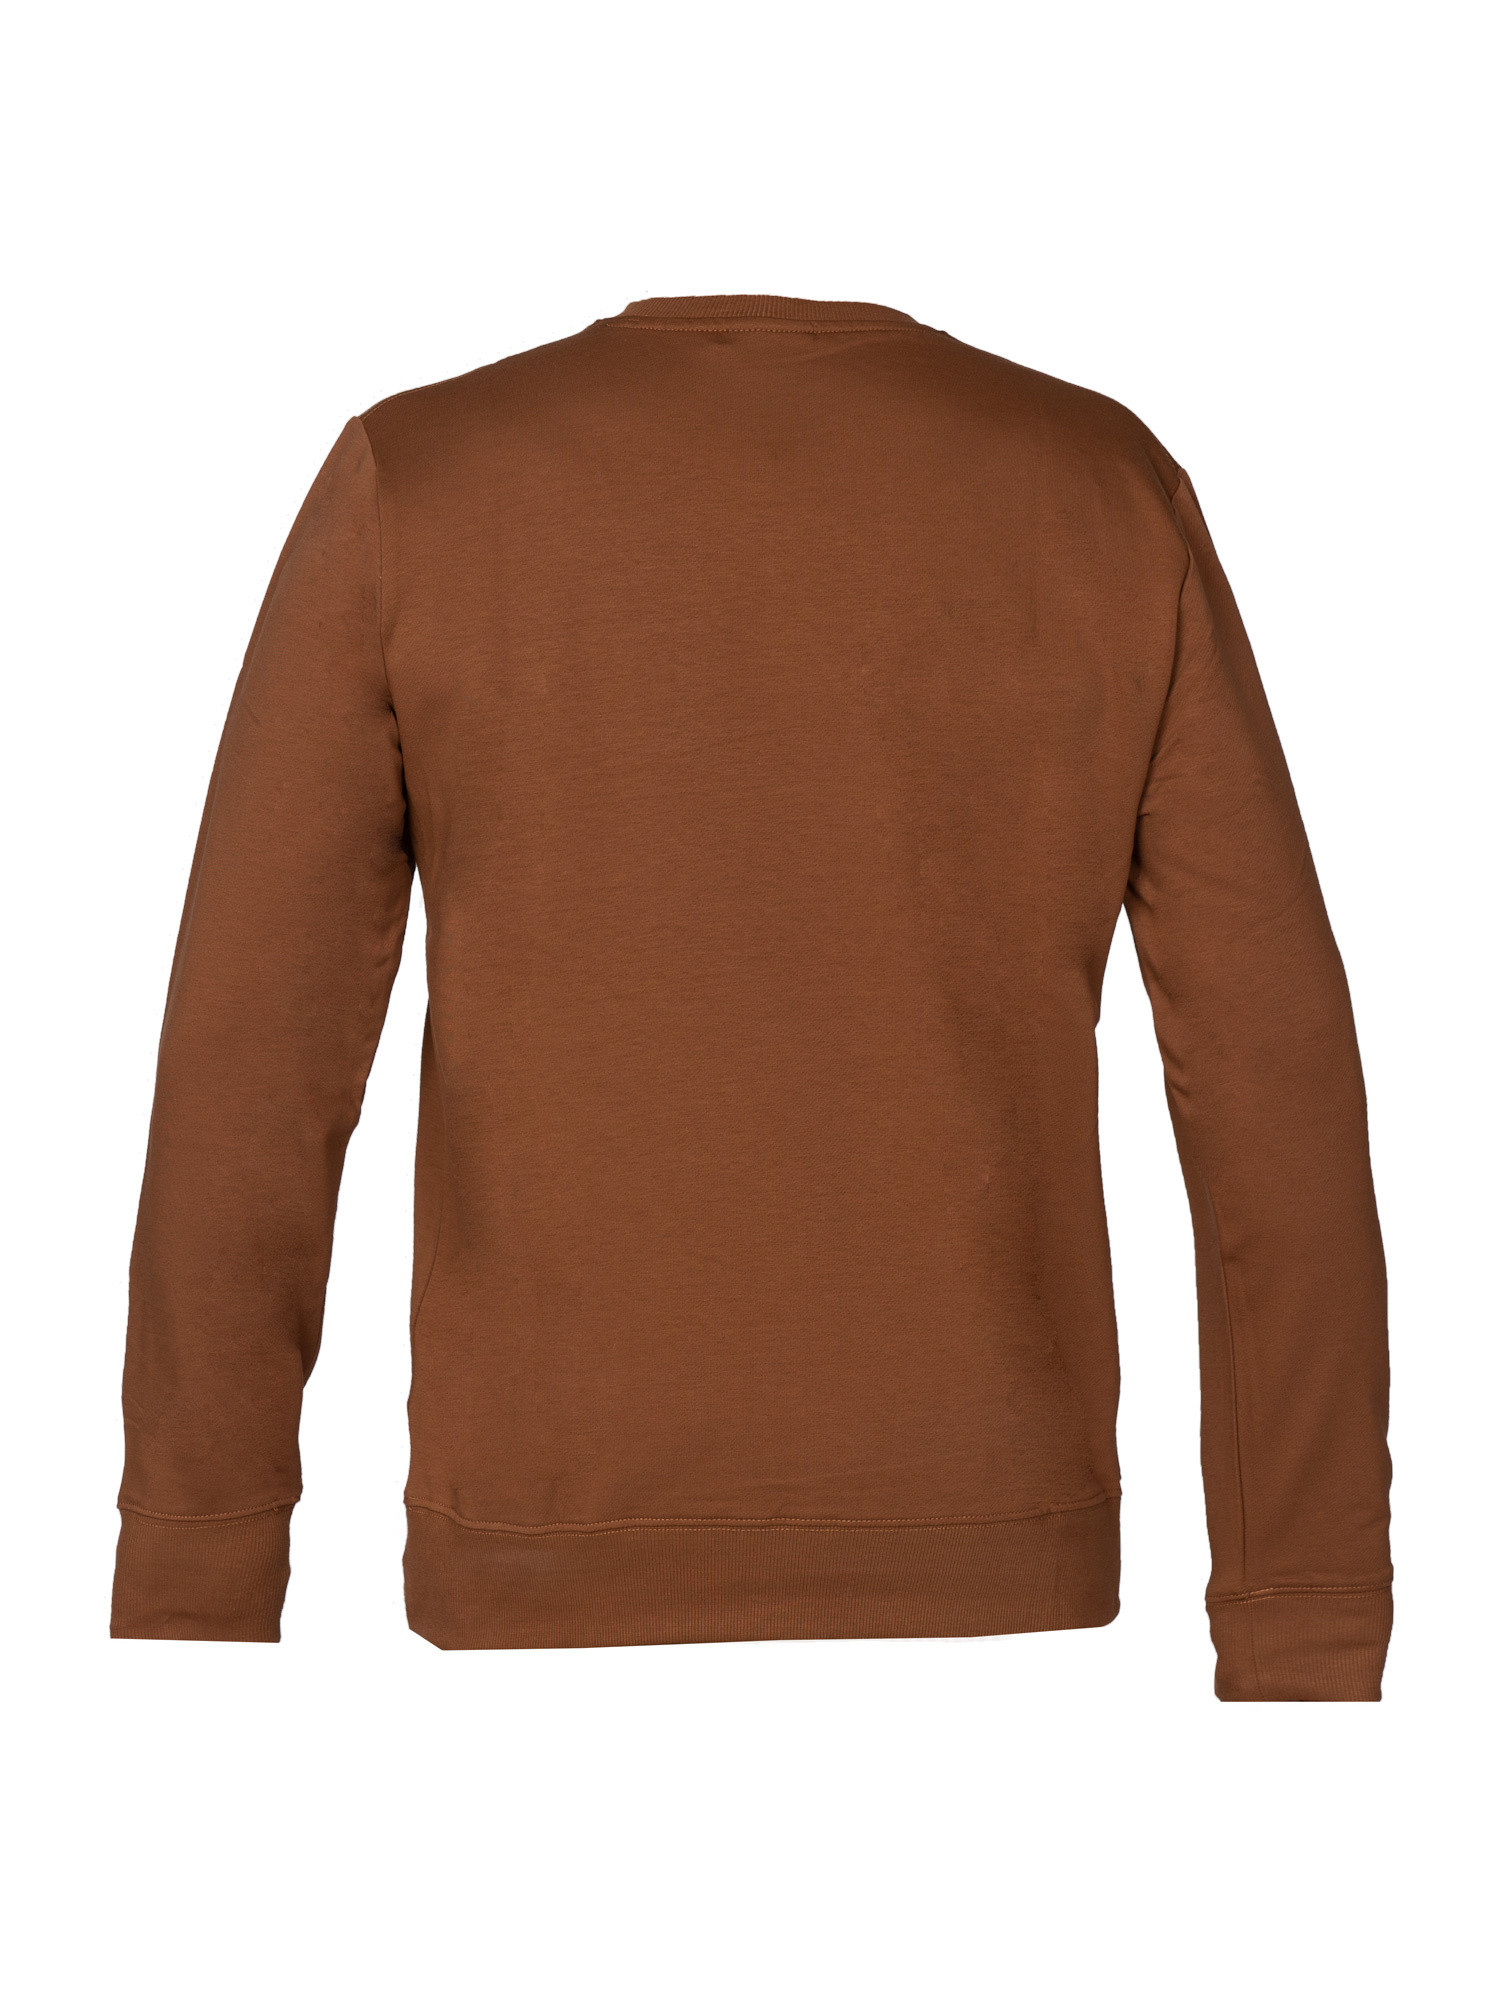 Project sweatshirt, Brown, large image number 1